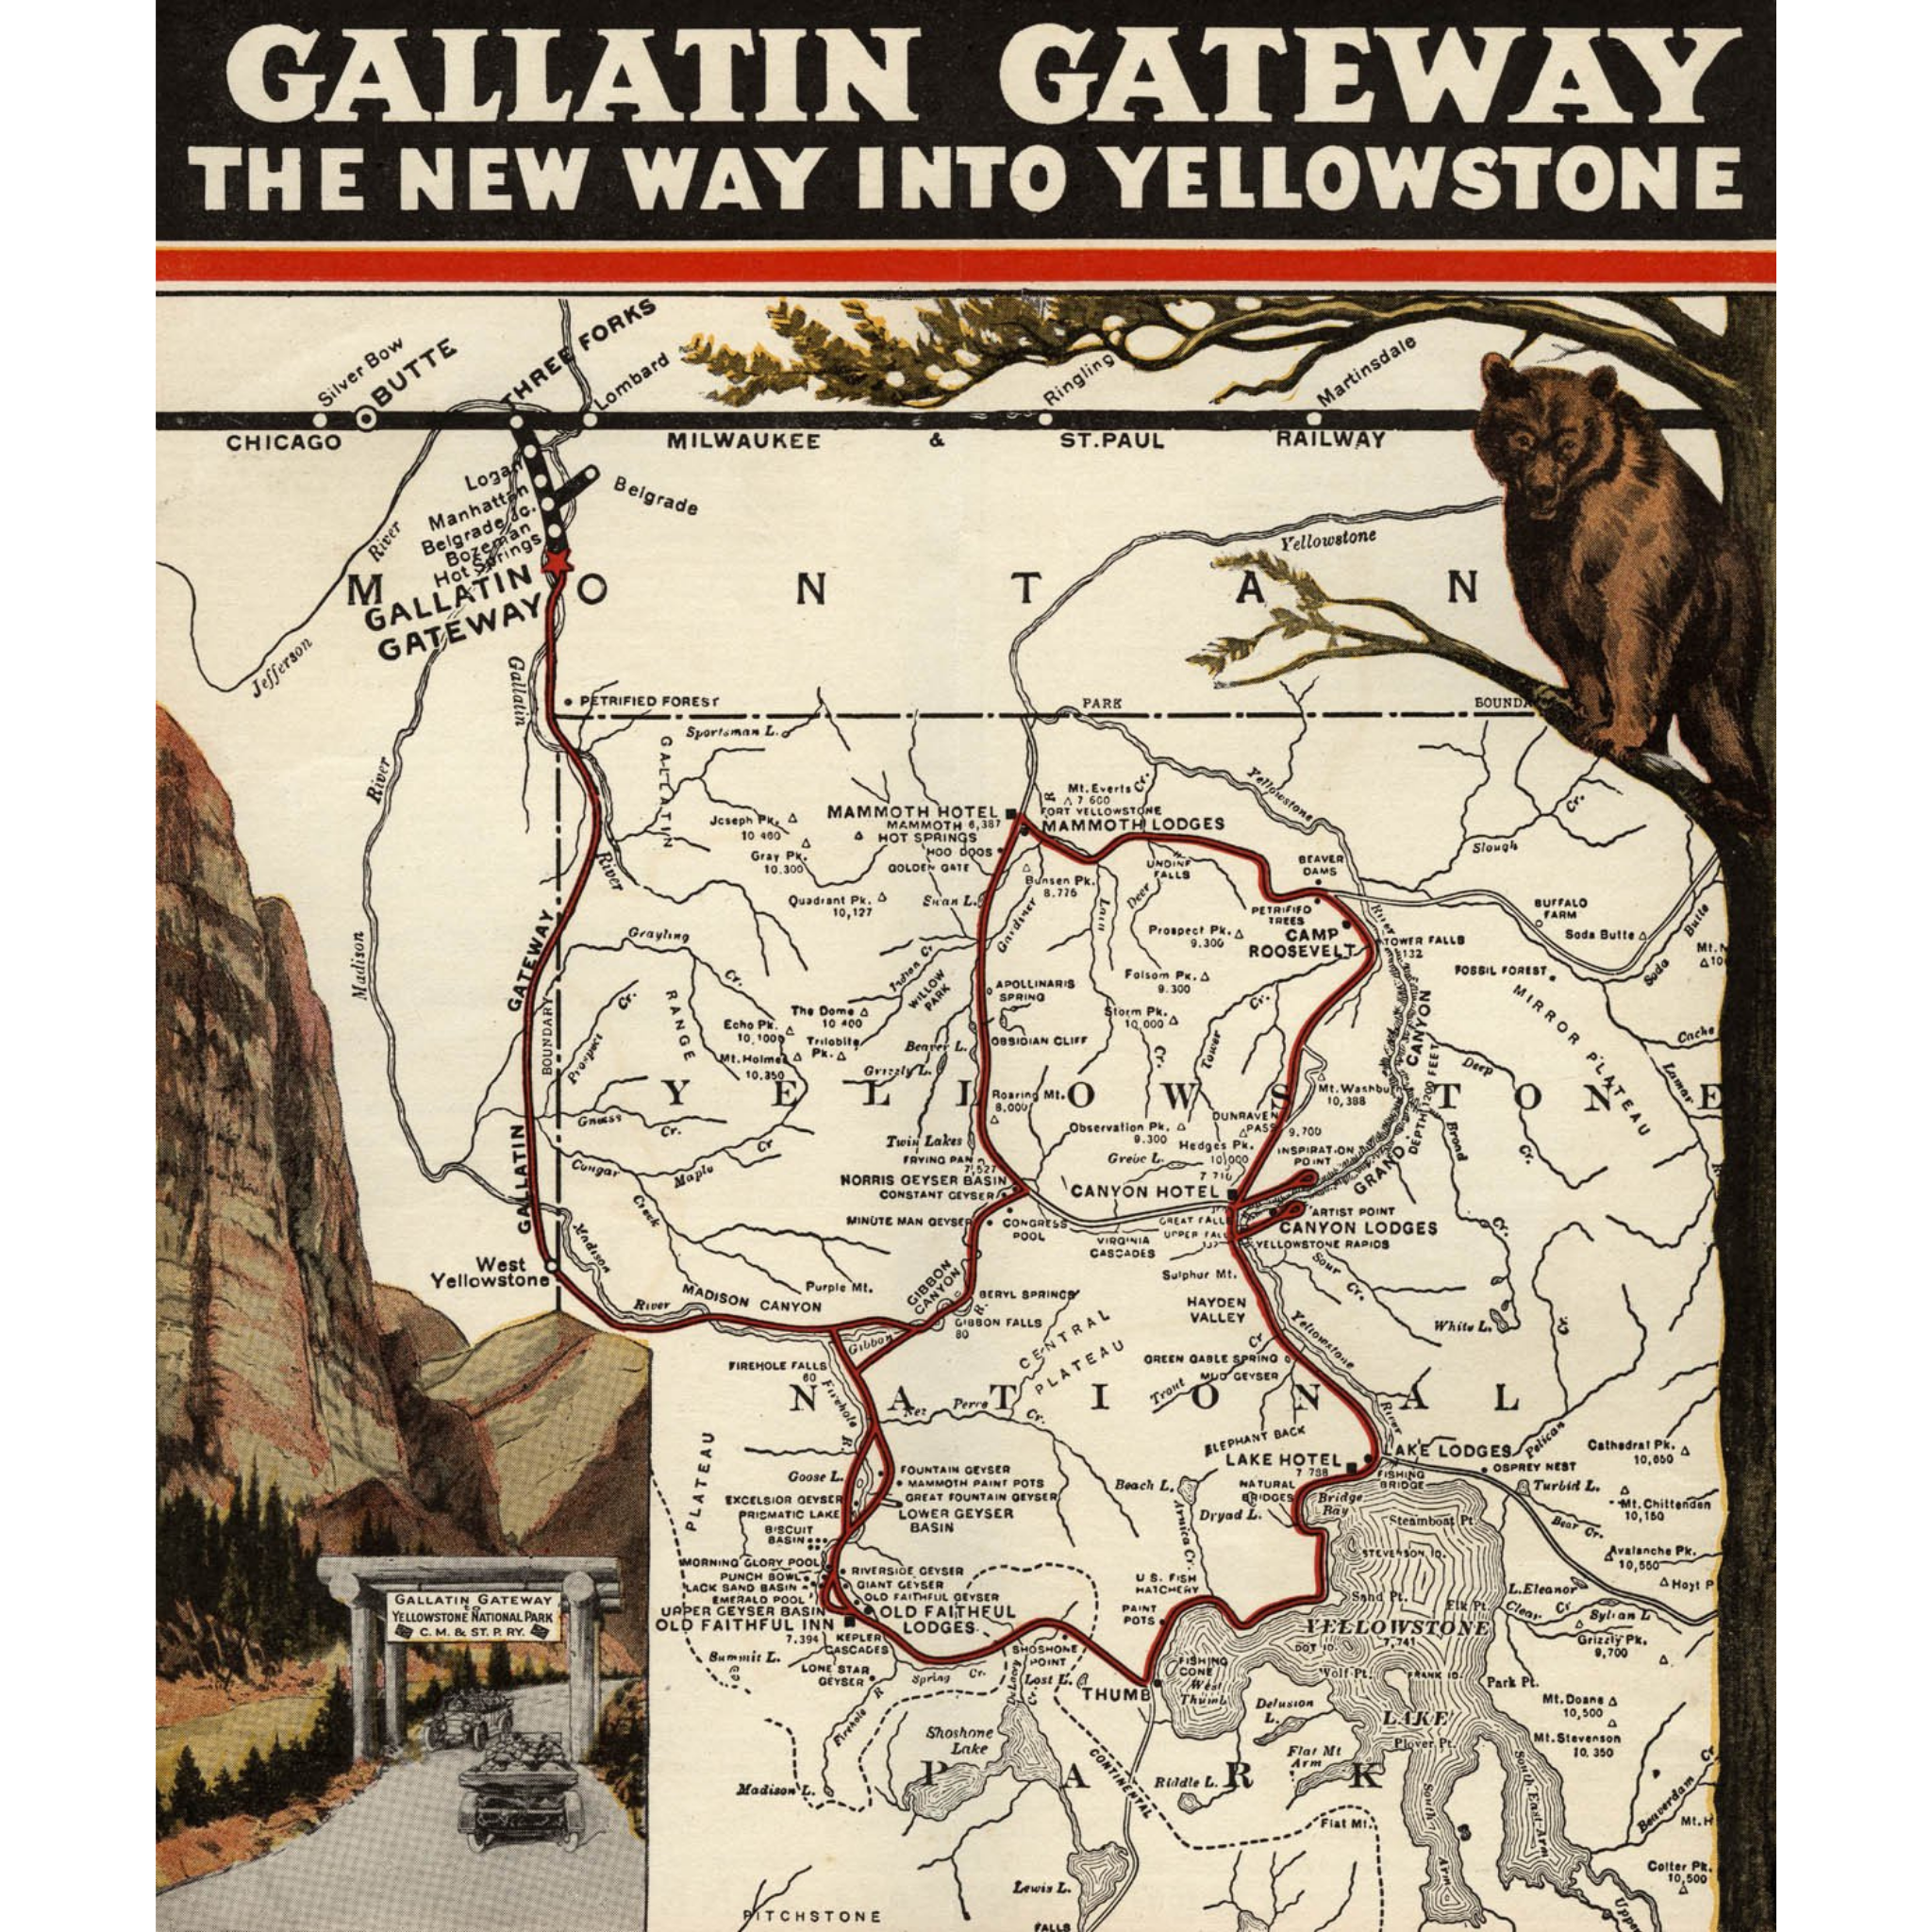 1927 Gallatin Gateway Map into Yellowstone Park